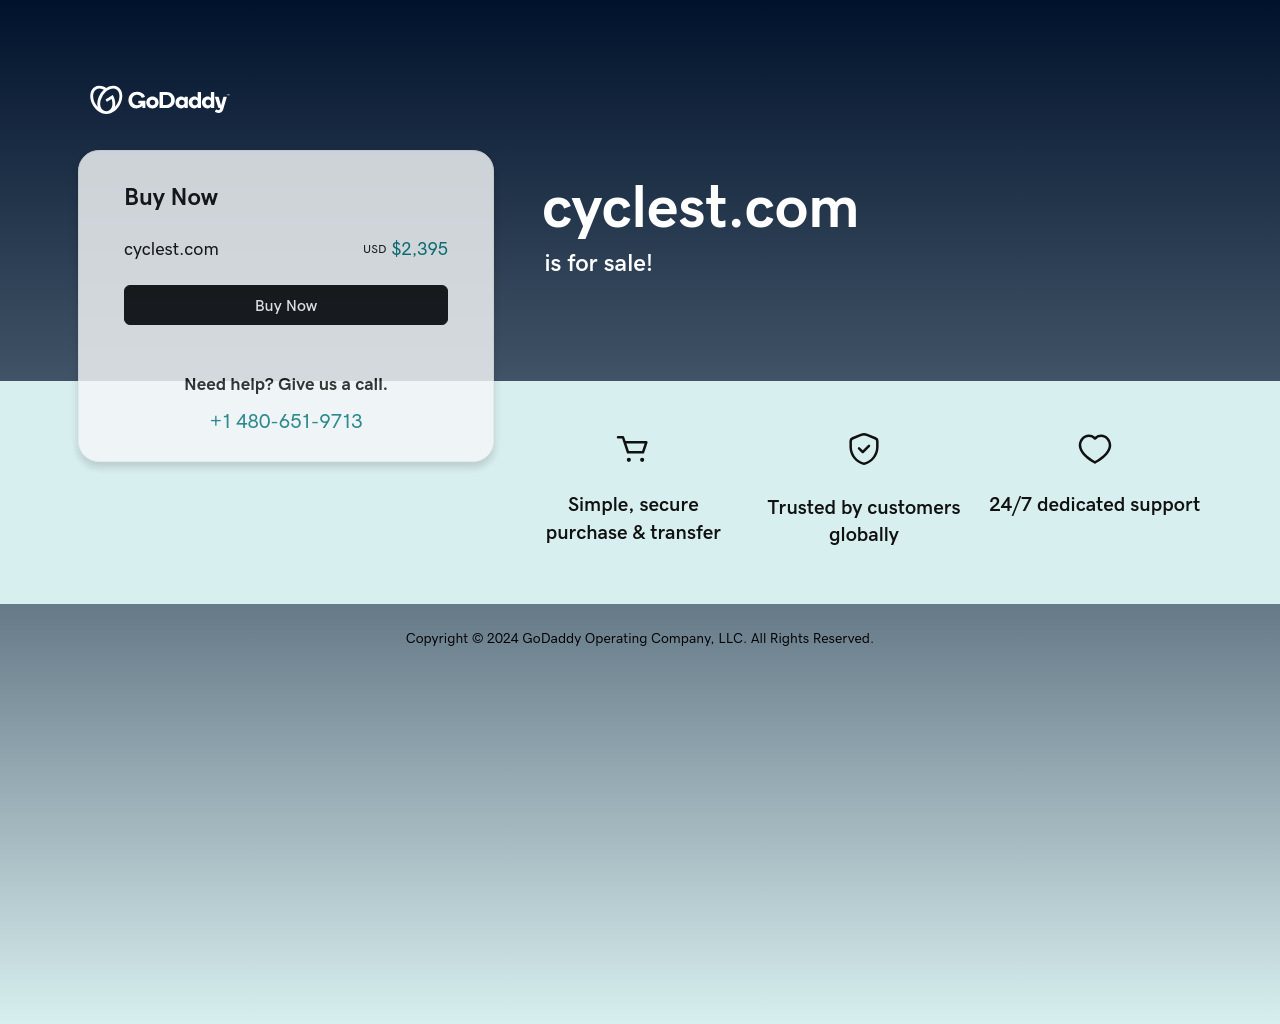 cyclest.com